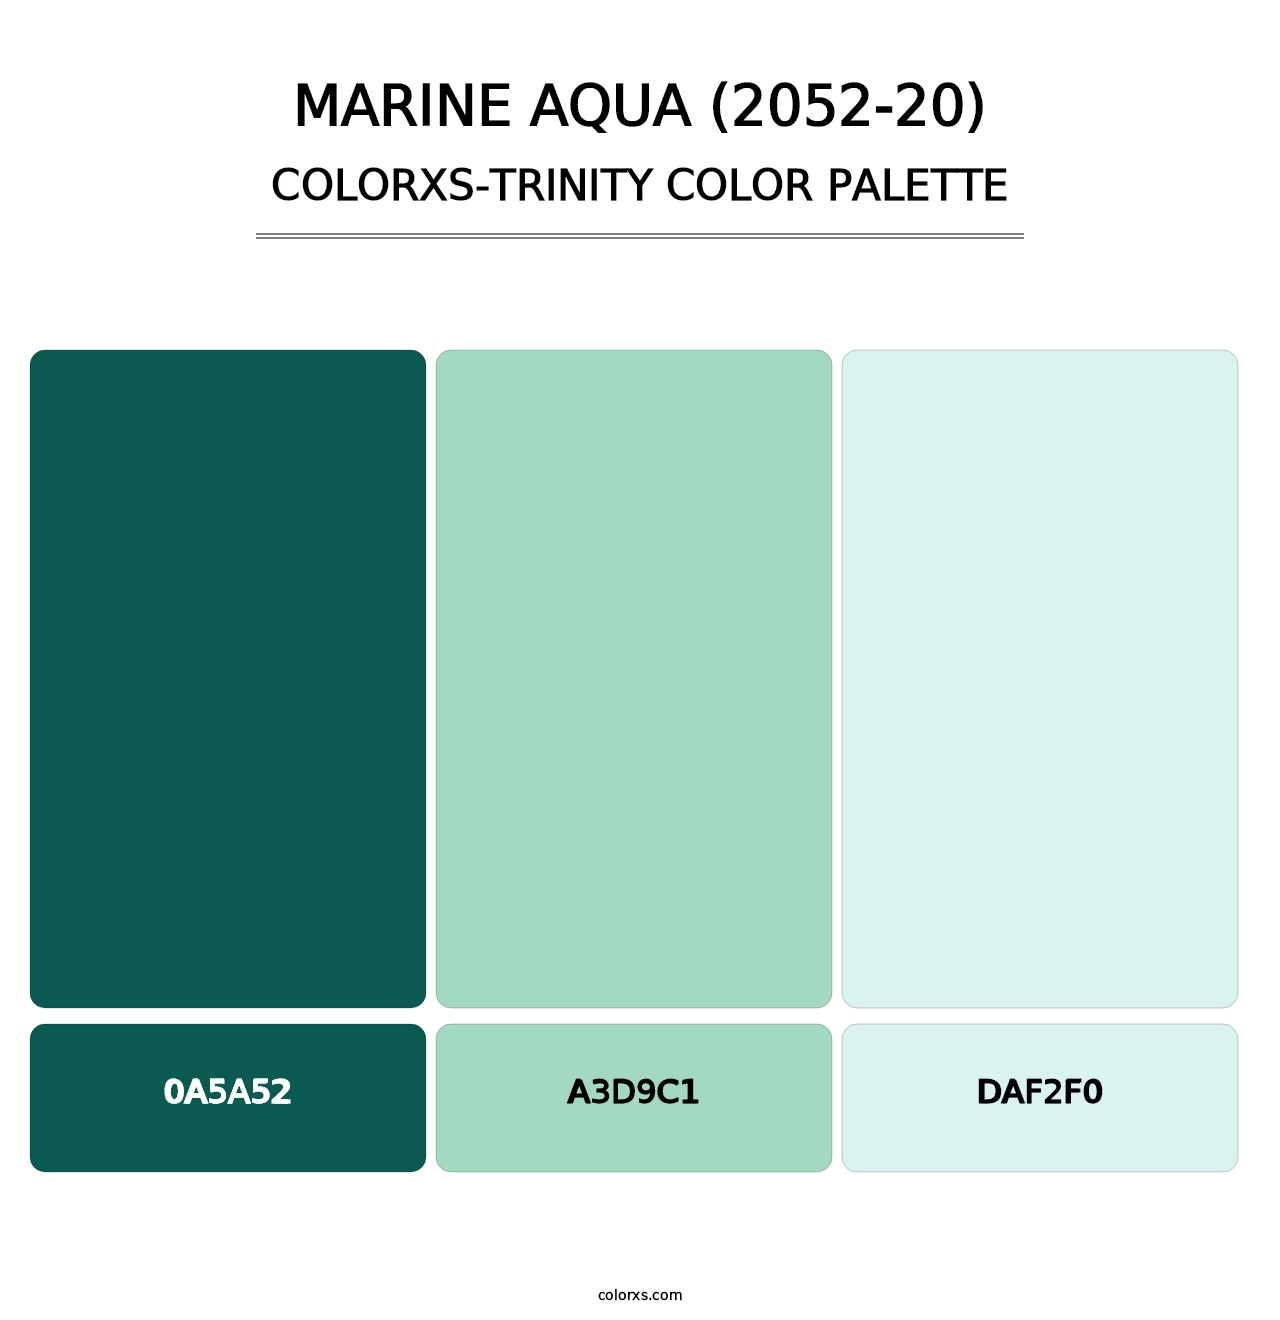 Marine Aqua (2052-20) - Colorxs Trinity Palette